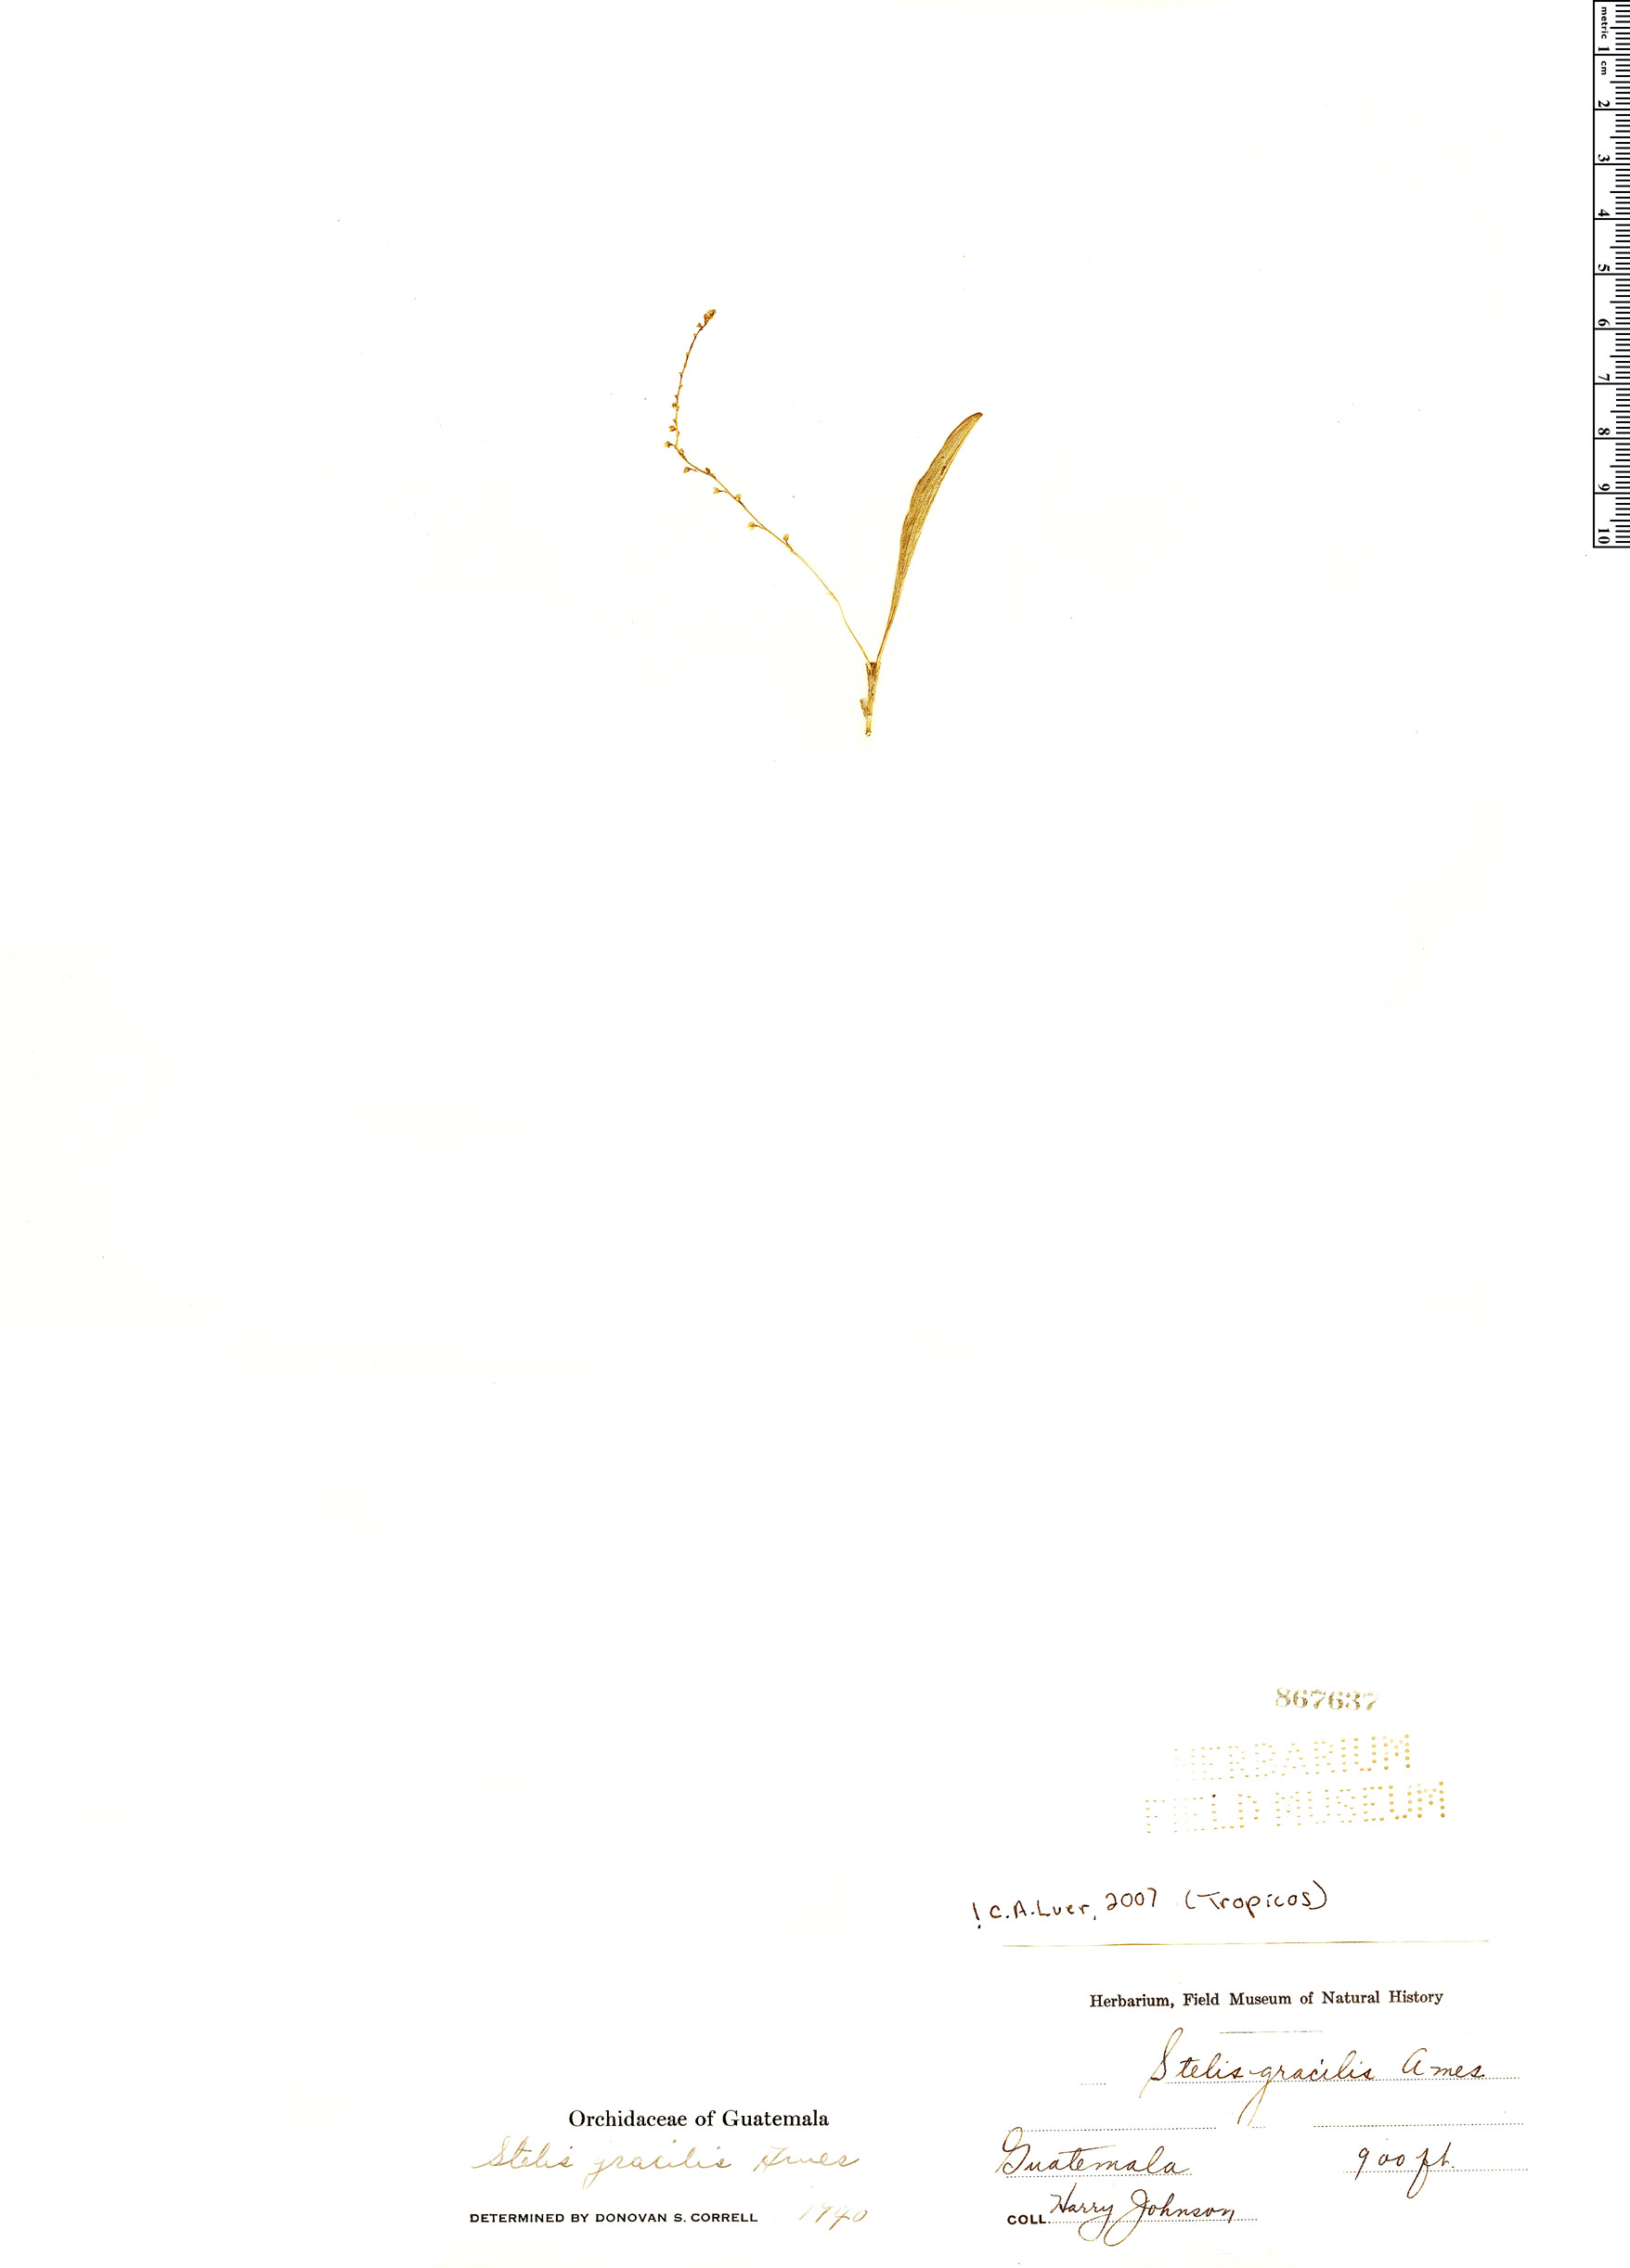 Stelis gracilis image